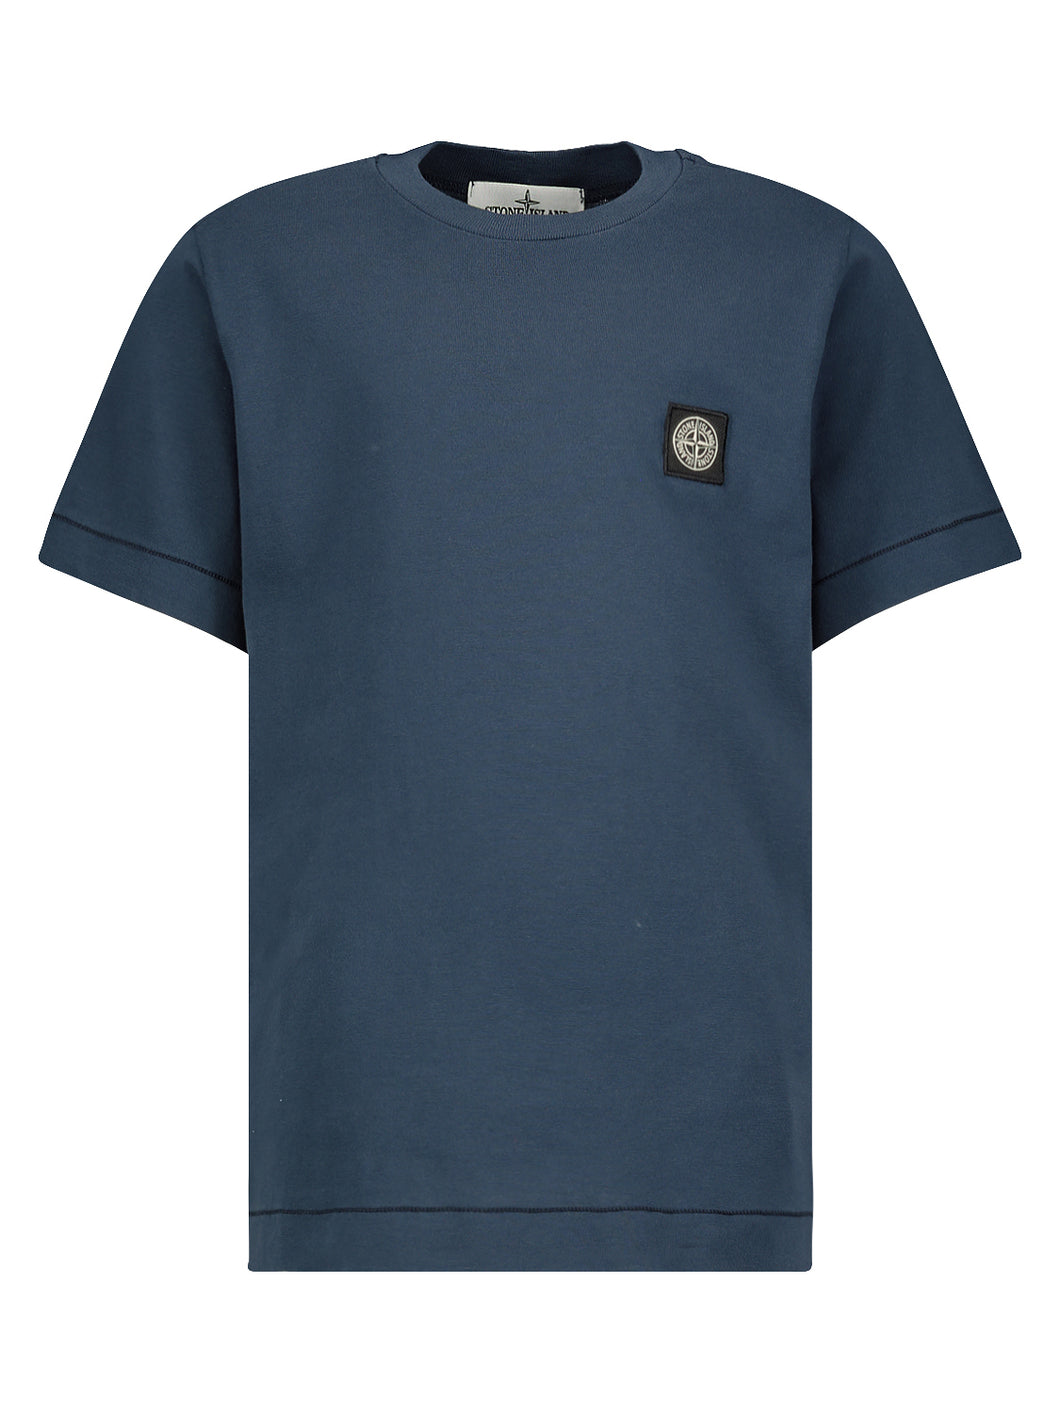 T-shirt Stone Island blu - Junior & Co.it